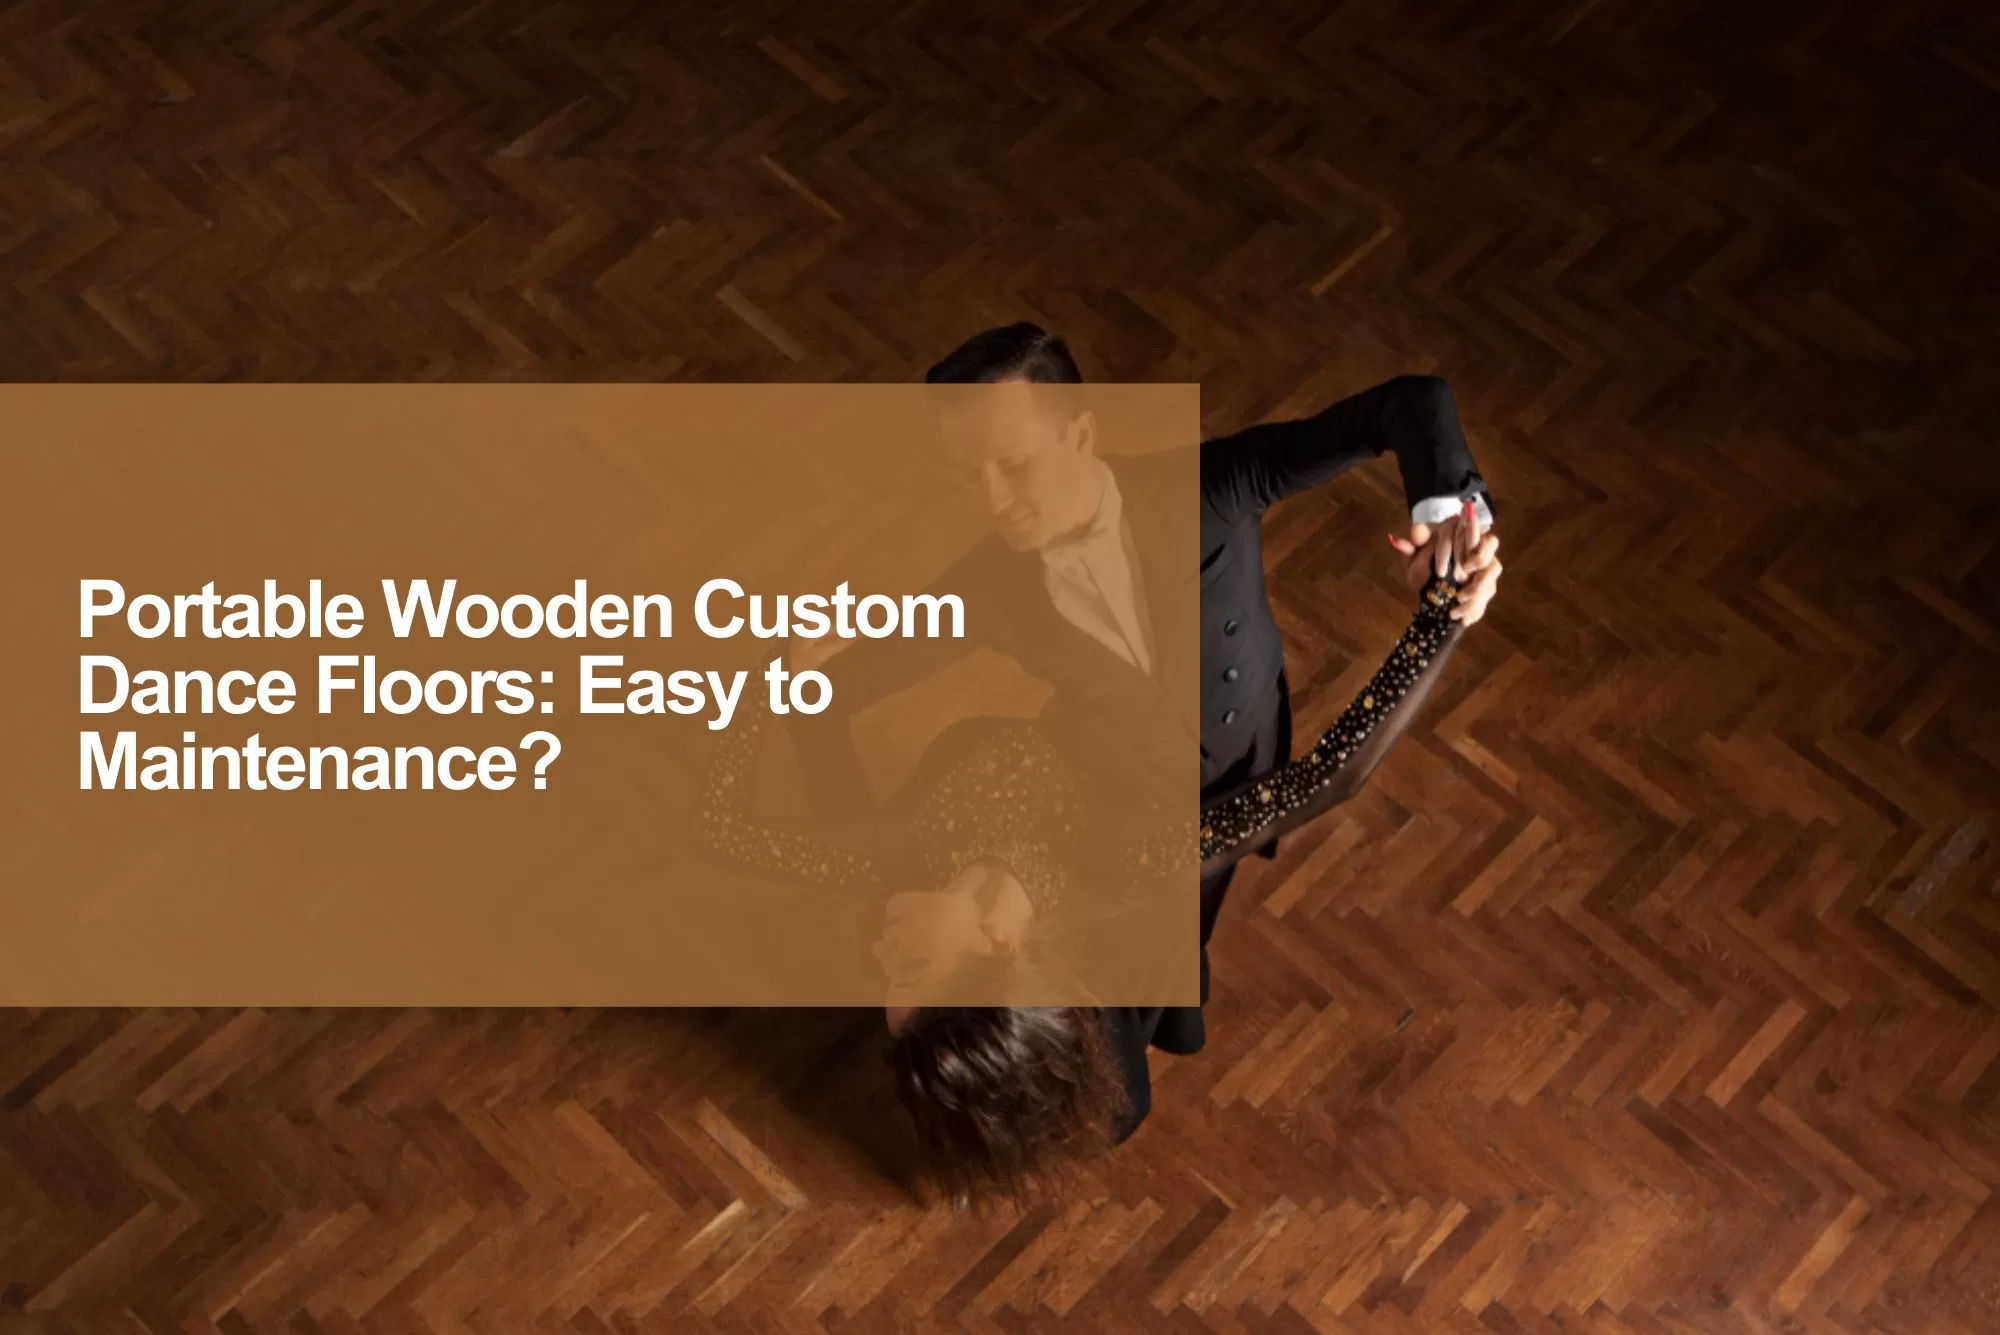 Portable Wooden Custom Dance Floors: Easy to Maintenance?